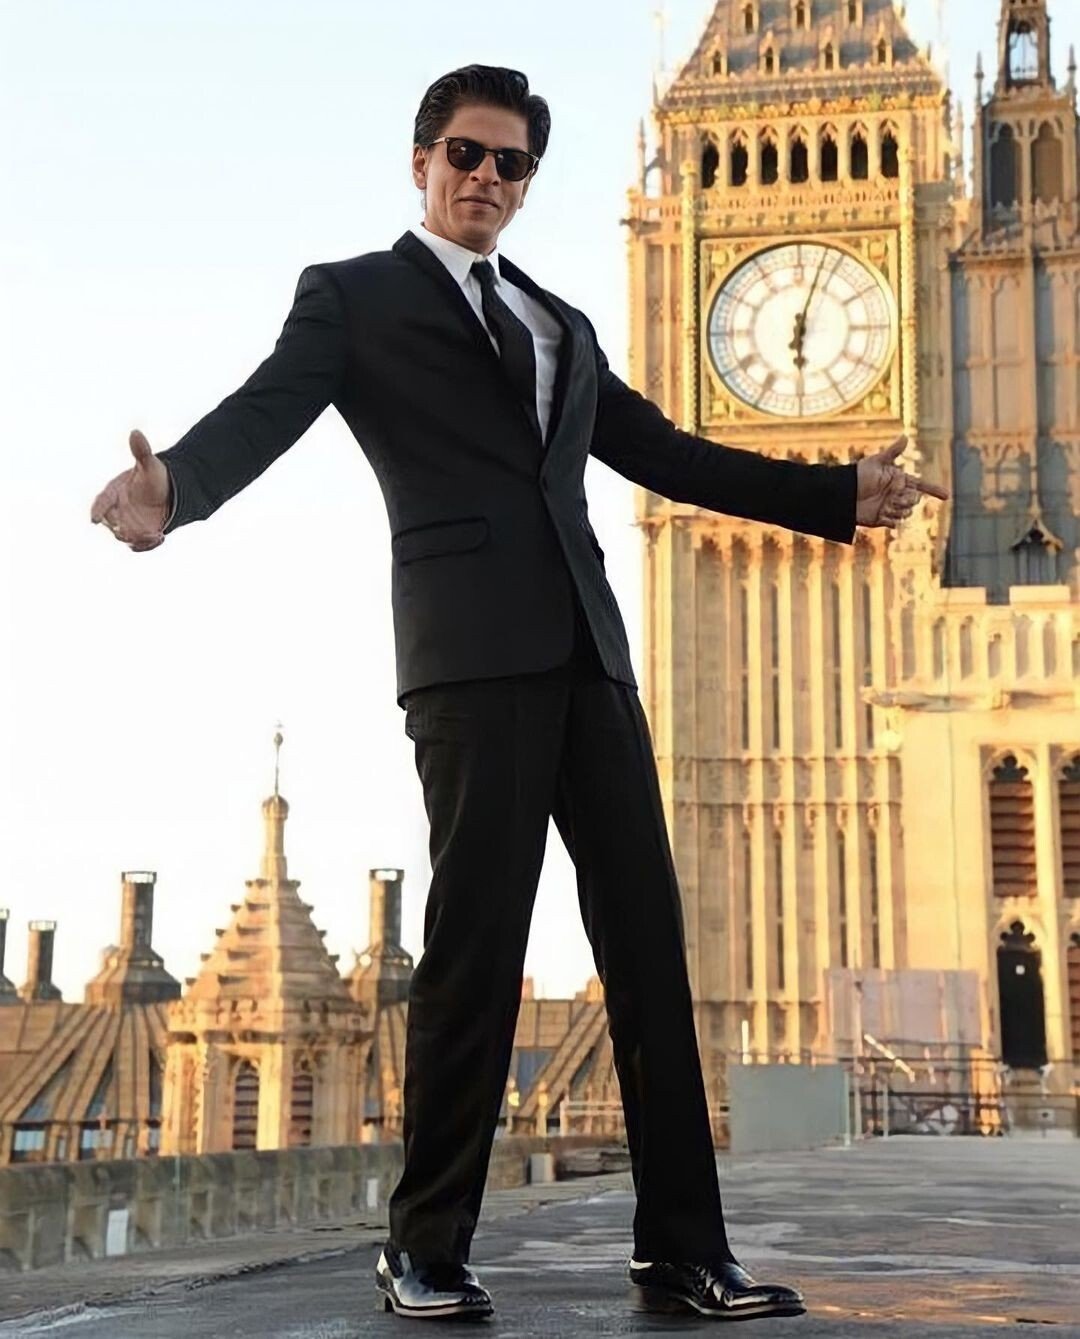 Bollywood star Shah Rukh Khan turns 55 on November 2 – seen here in his trademark pose. Photo: @srkking555/Instagram